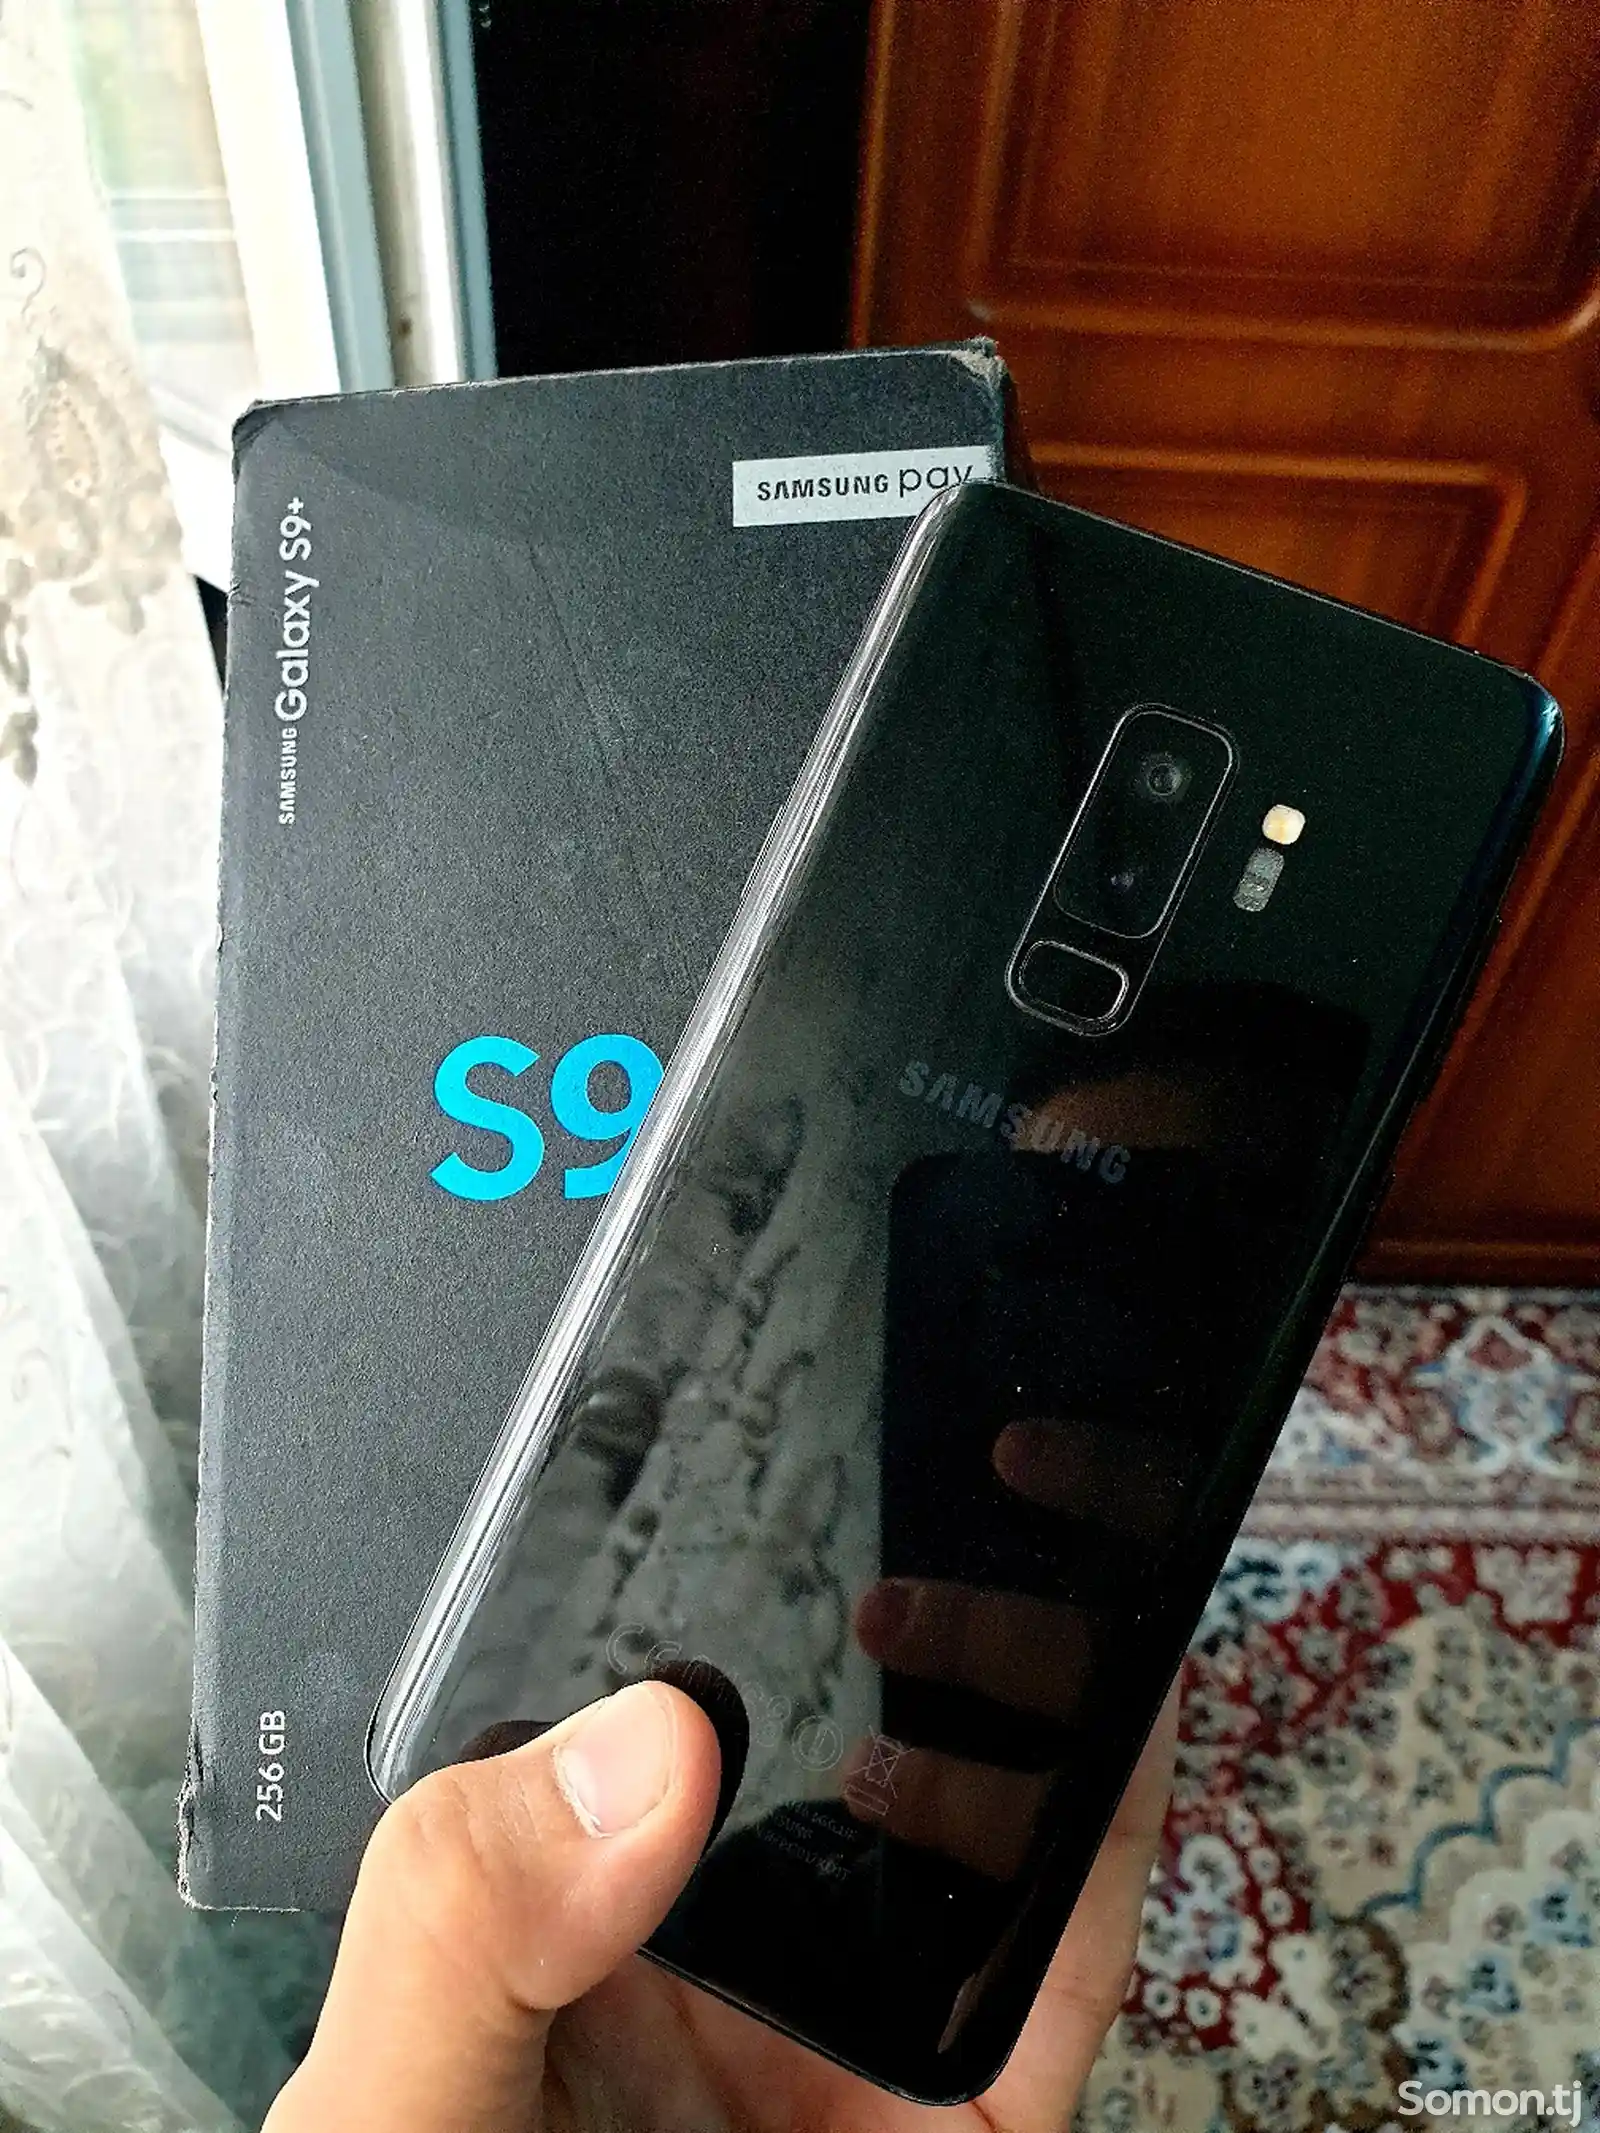 Samsung Galaxy S9+, 256 gb duos-2